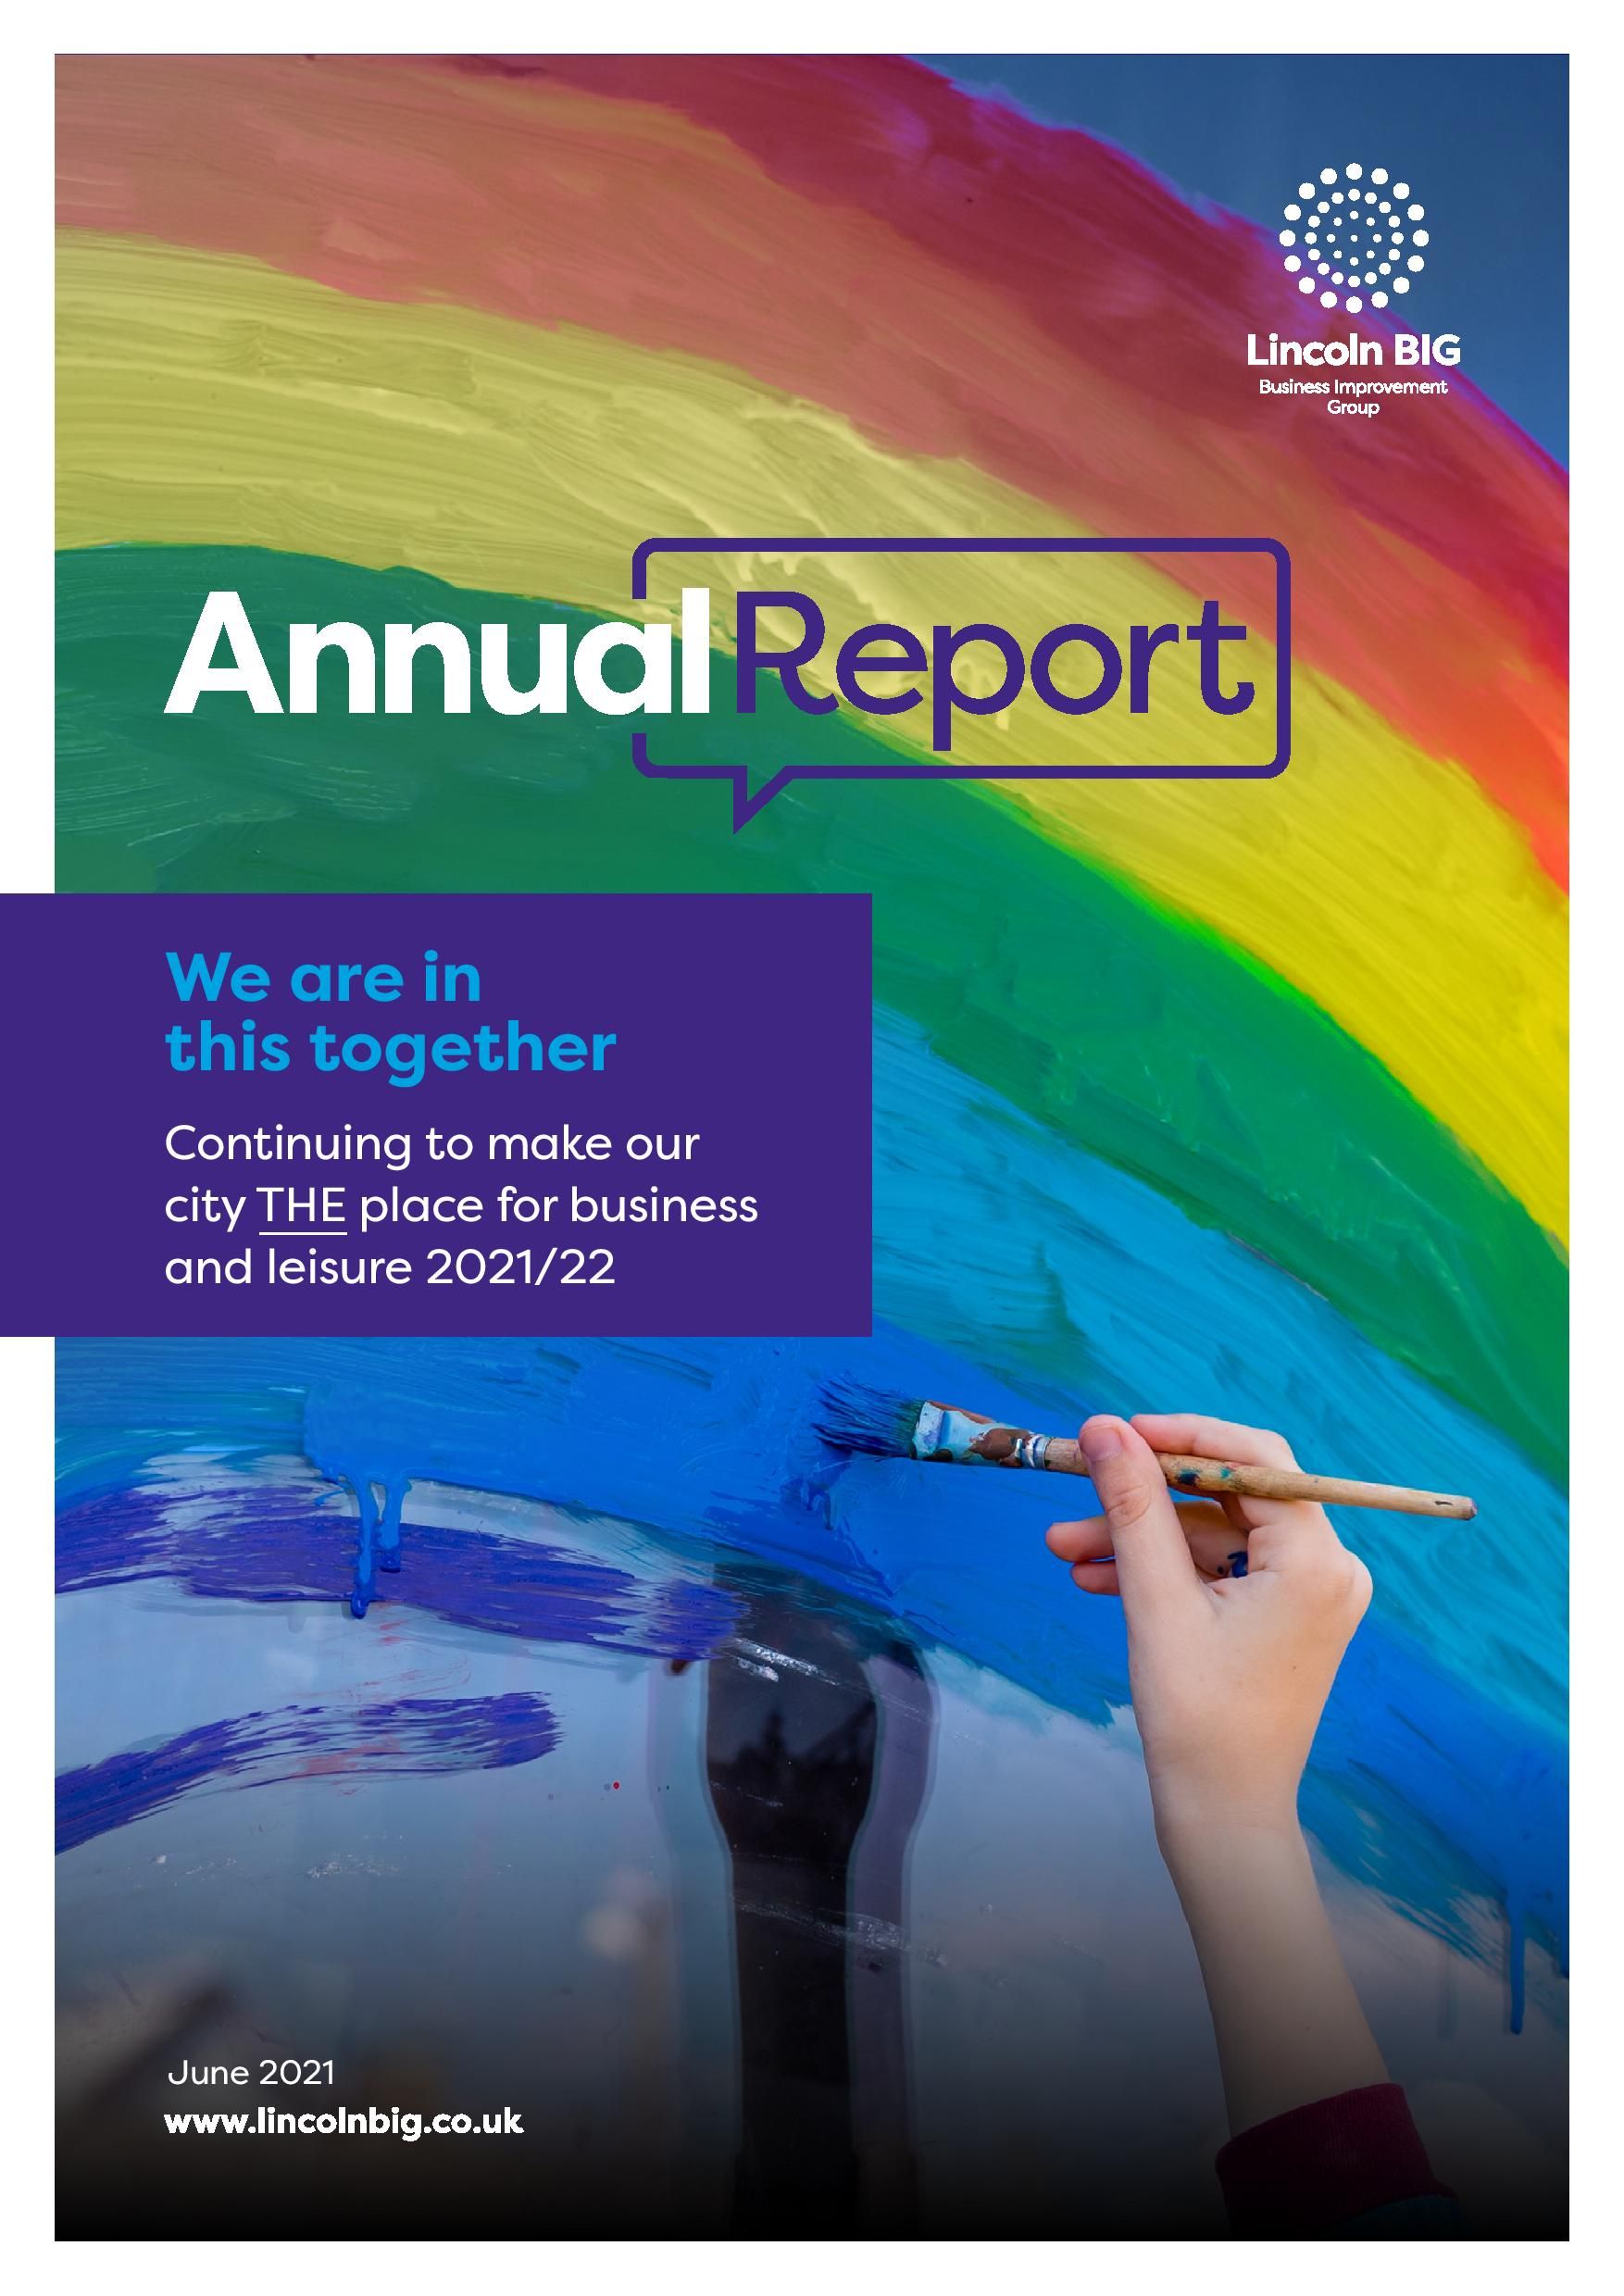 Annual Report '21